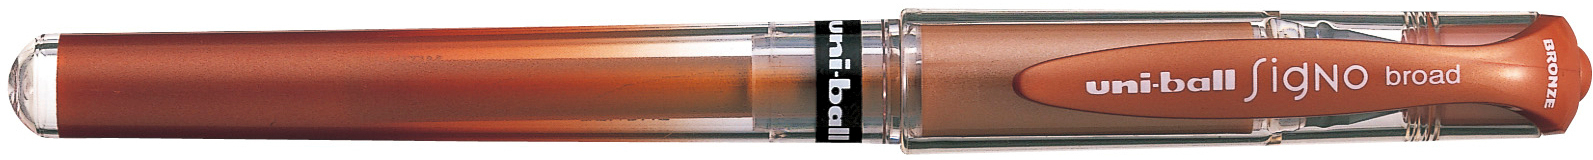 UNI-BALL Signo Broad 1mm UM153 BRONZE bronze-métalic